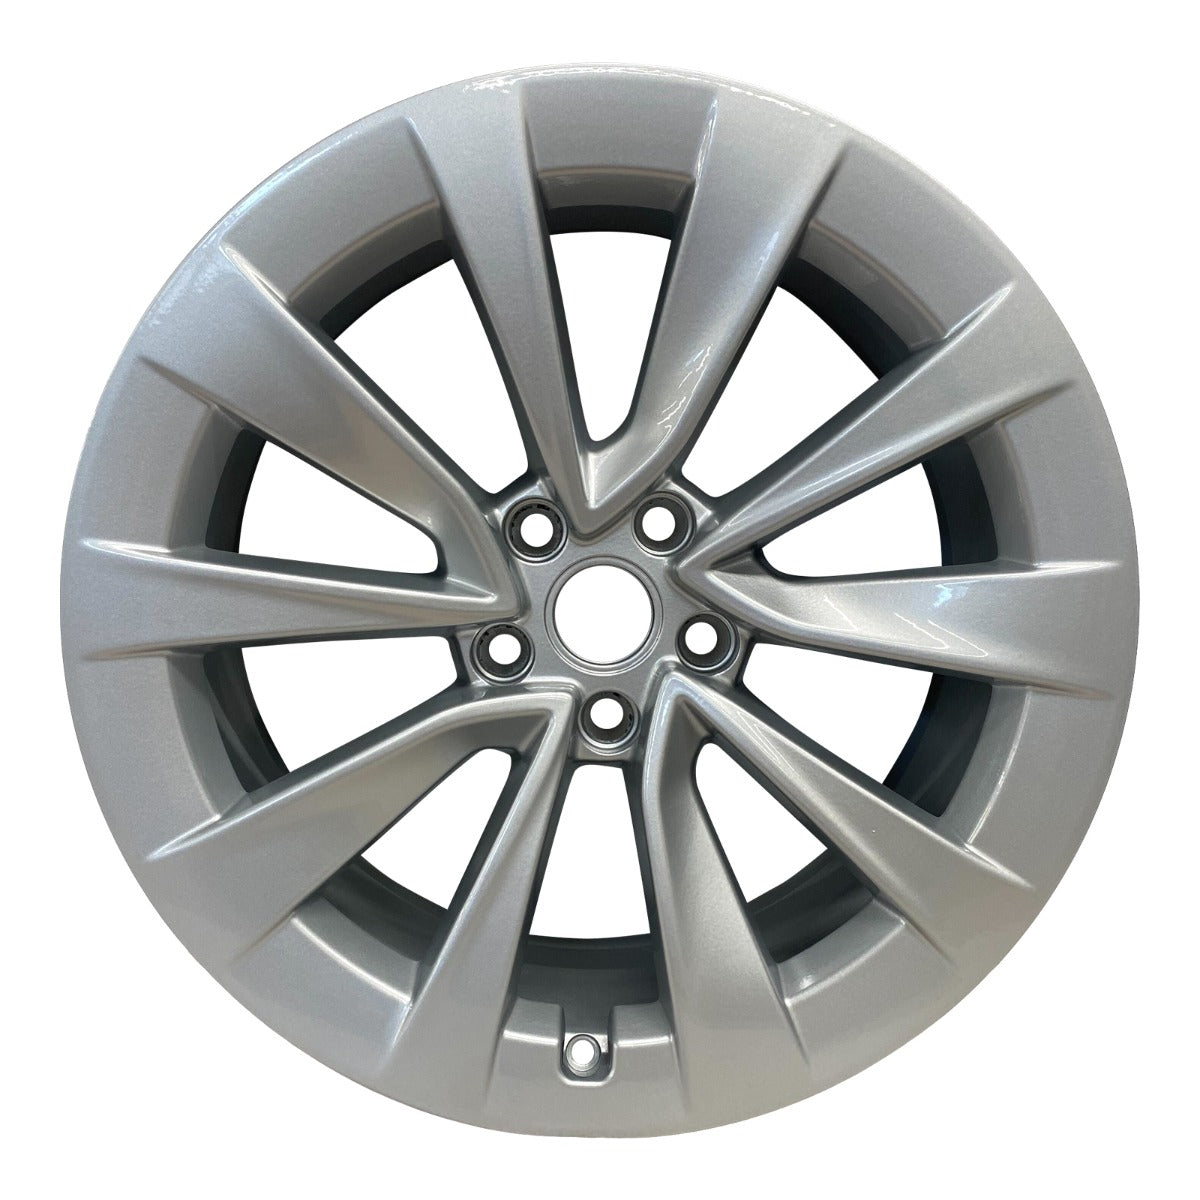 2023 Volkswagen Bora - Wheel & Tire Sizes, PCD, Offset and Rims specs